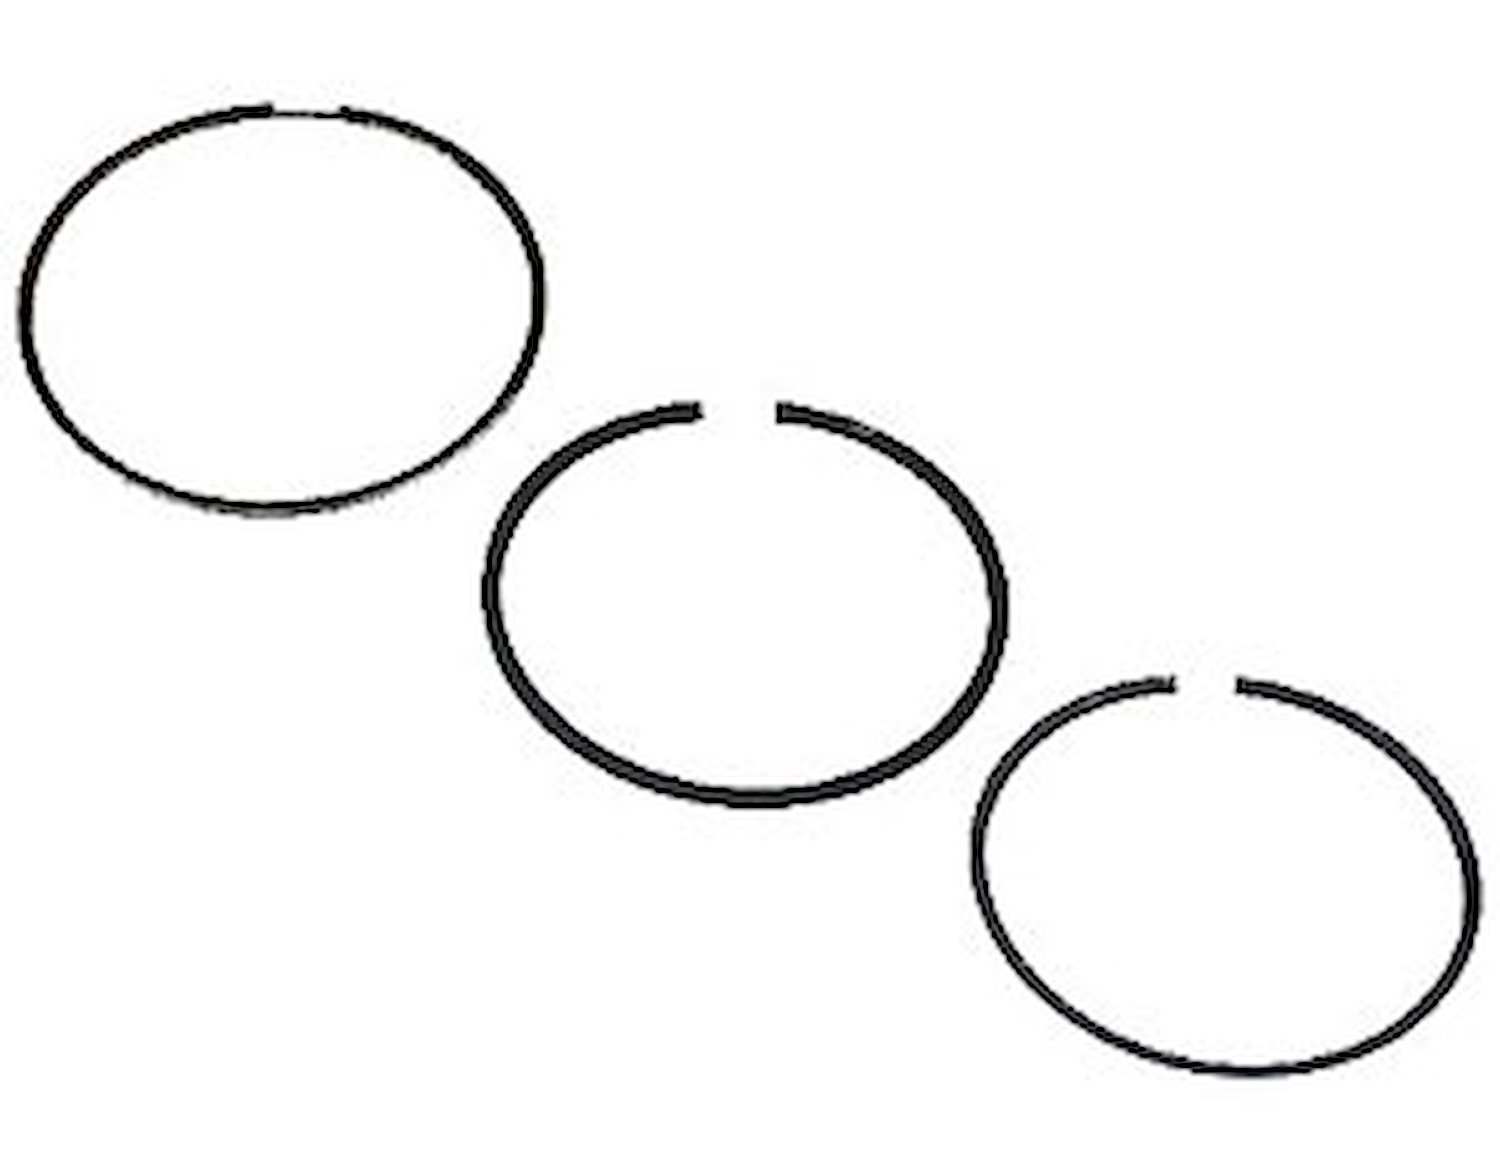 Standard Tension Piston Ring Set Bore: 4.310"/File Fit: 4.315"